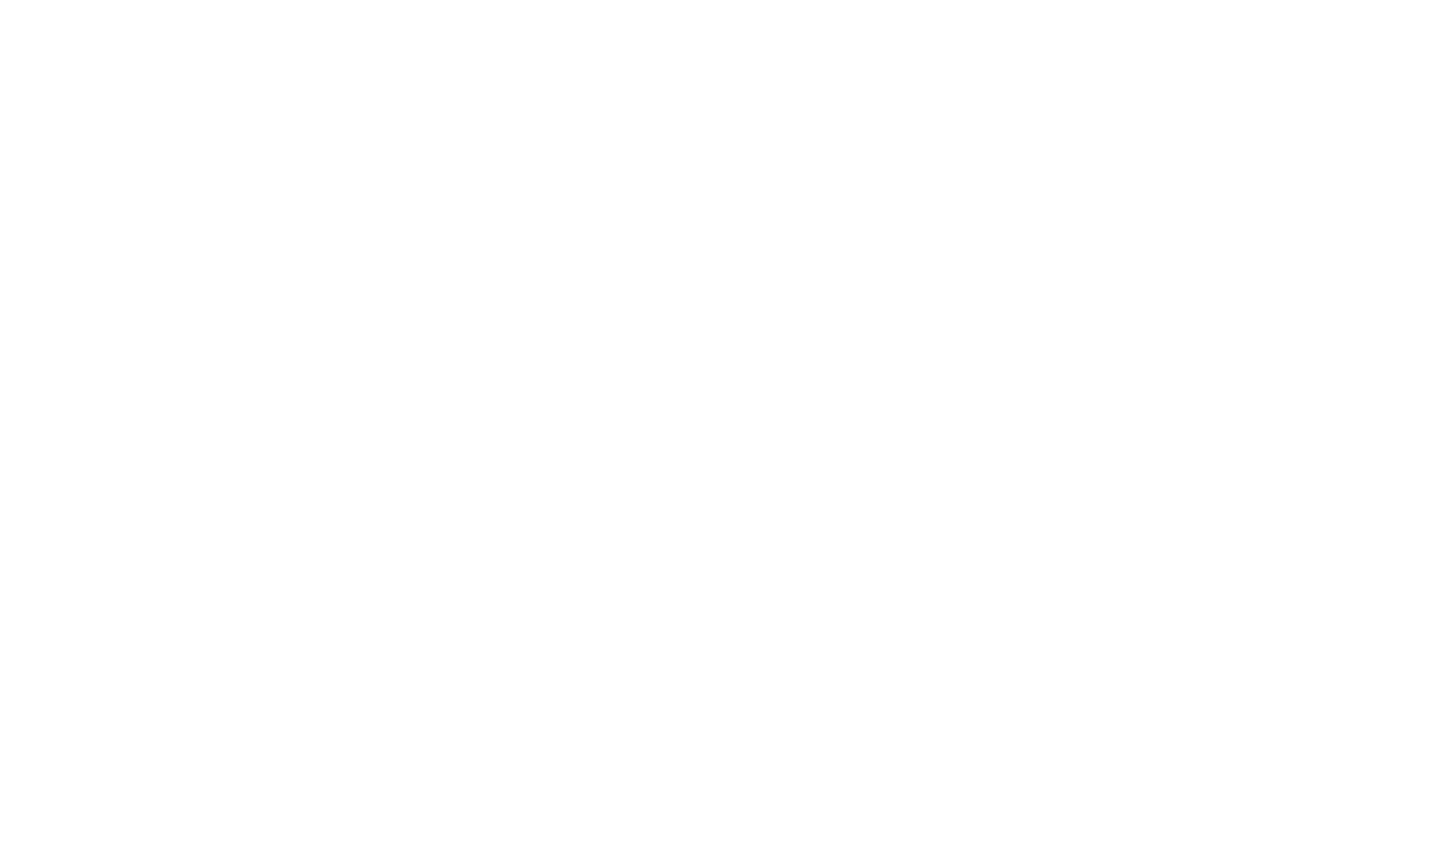 Powerboat Championship logo 